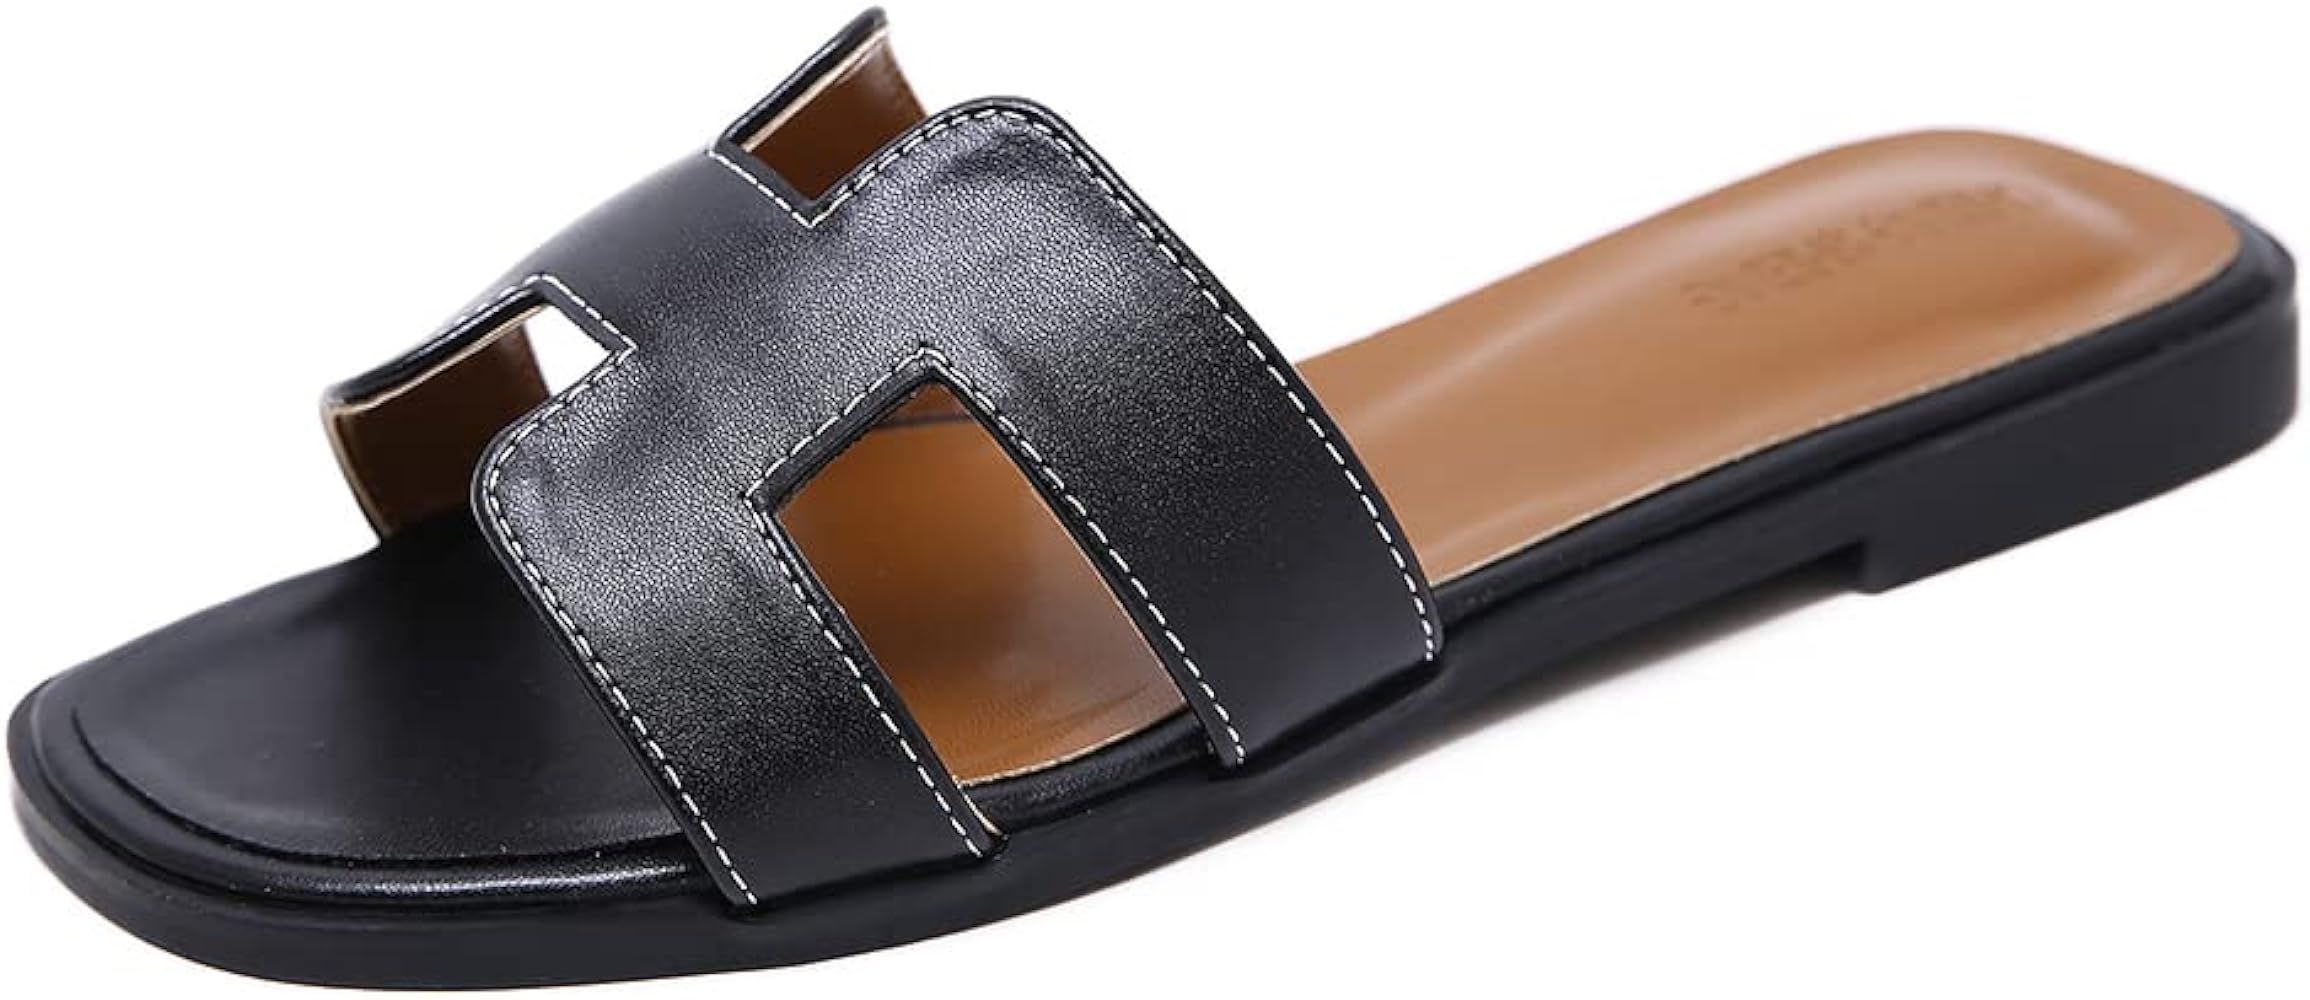 Stratuxx Kaze Womens Flat Sandals Flat Slide Sandals Band Sandals White Black Brown Metallic Sandals | Amazon (US)